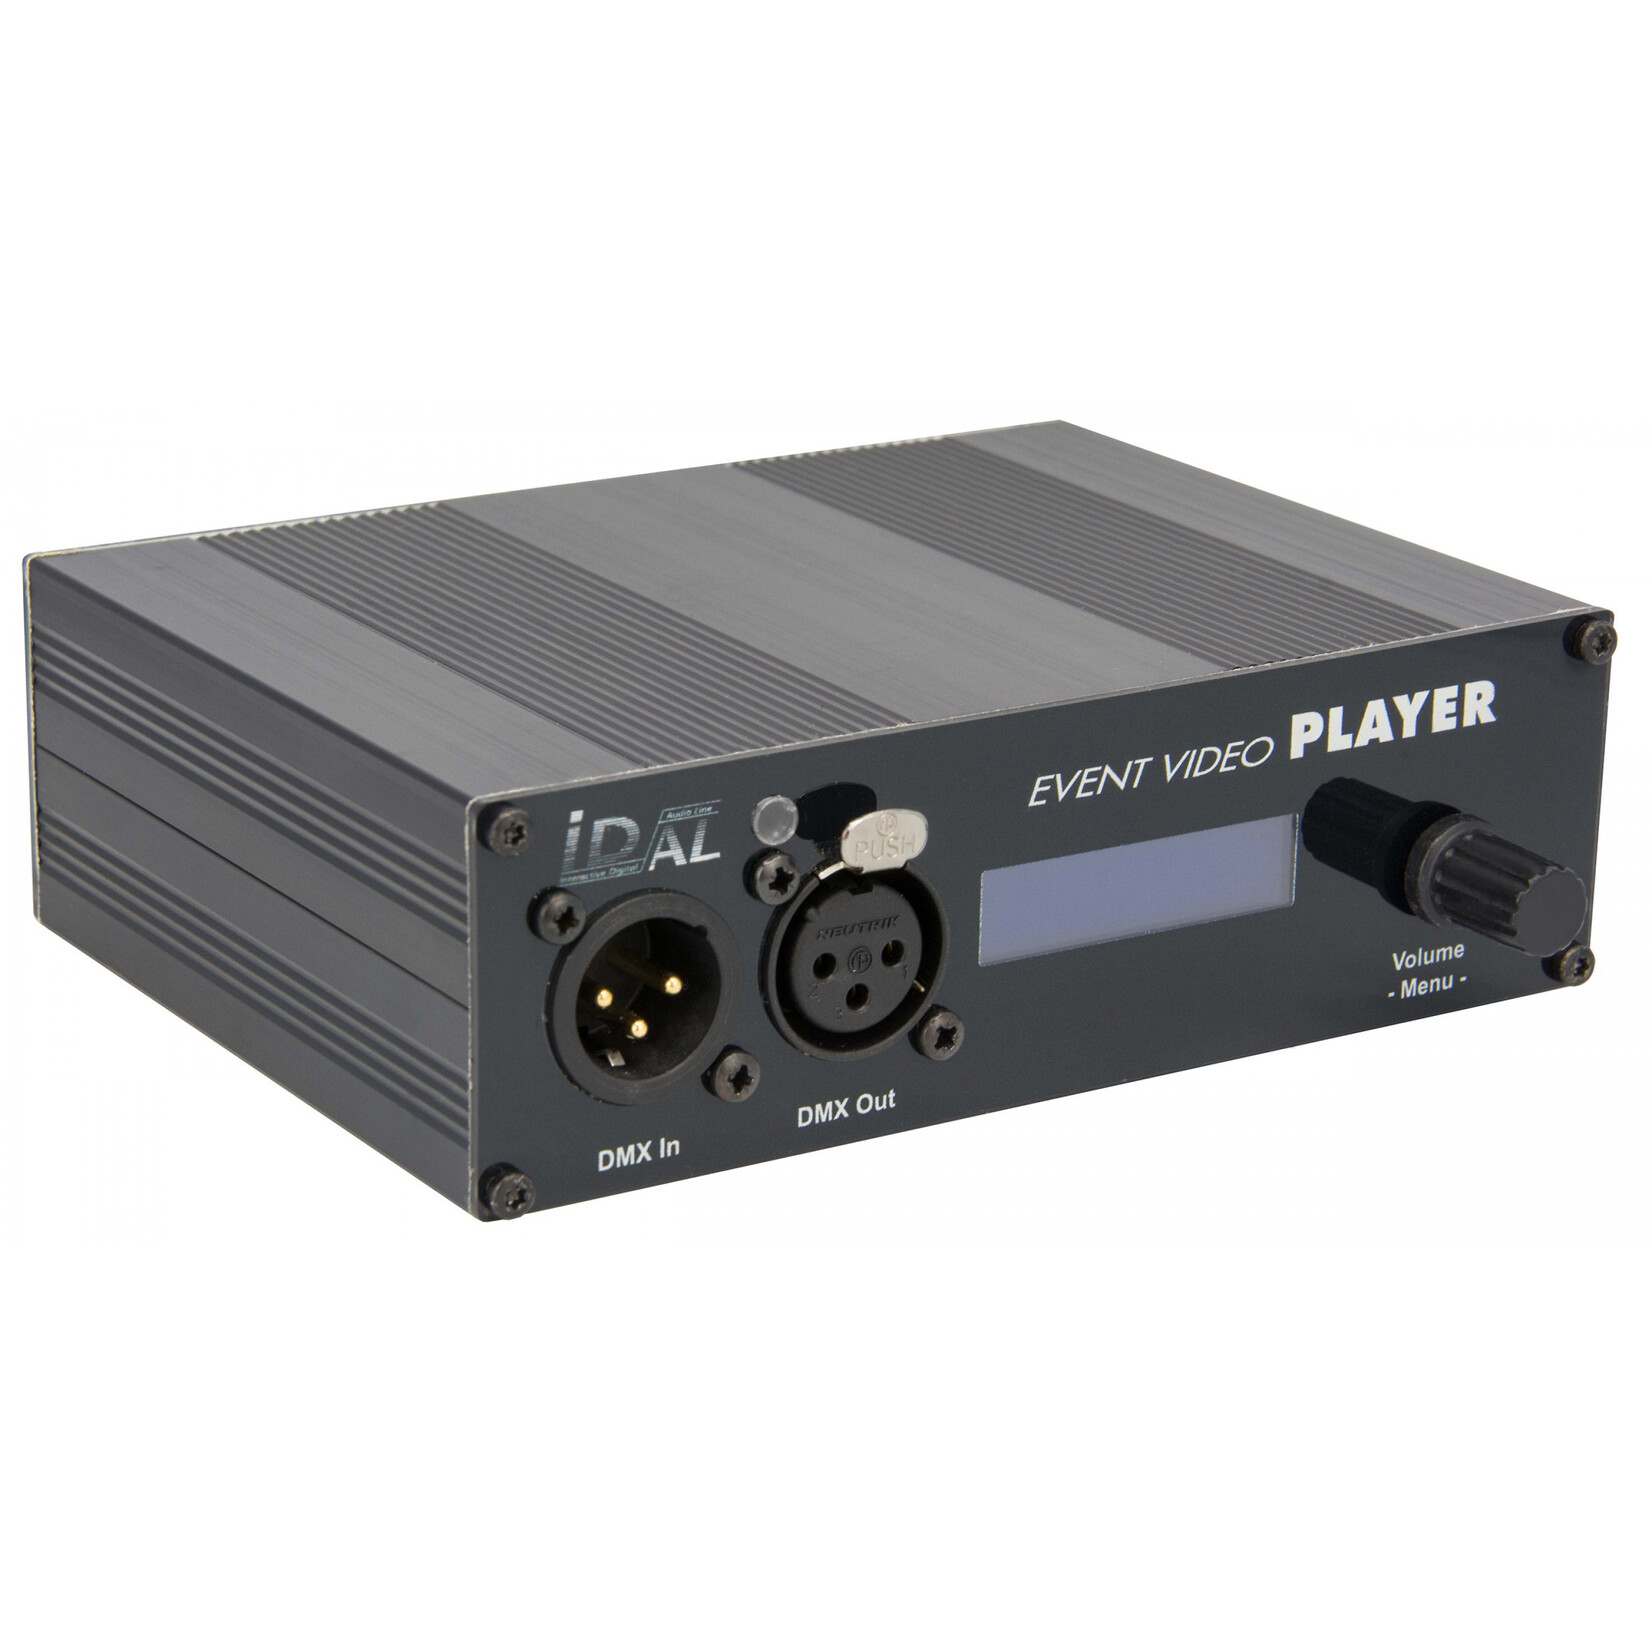 ID-AL Event Video Player EVP380